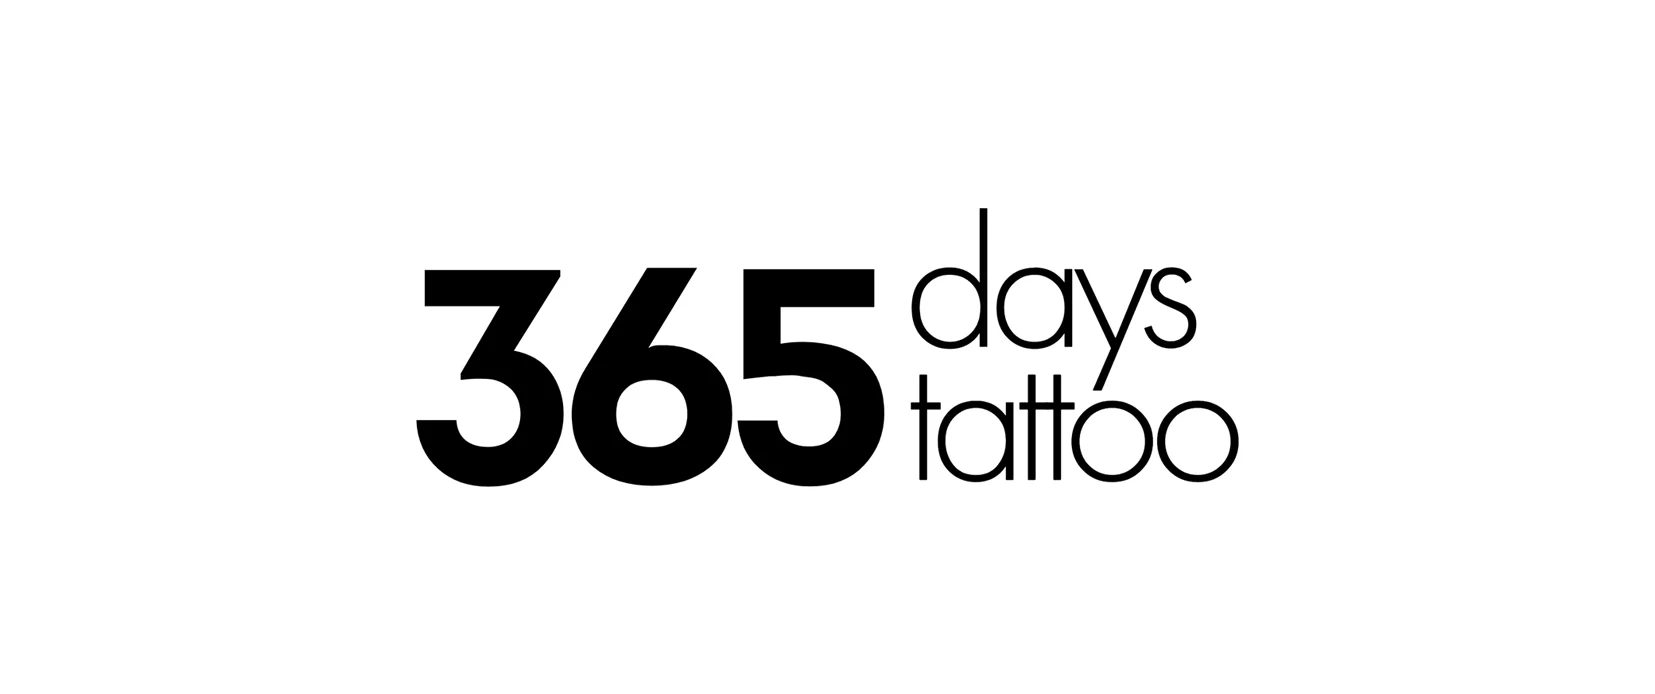 365days - салон тату и пирсинга